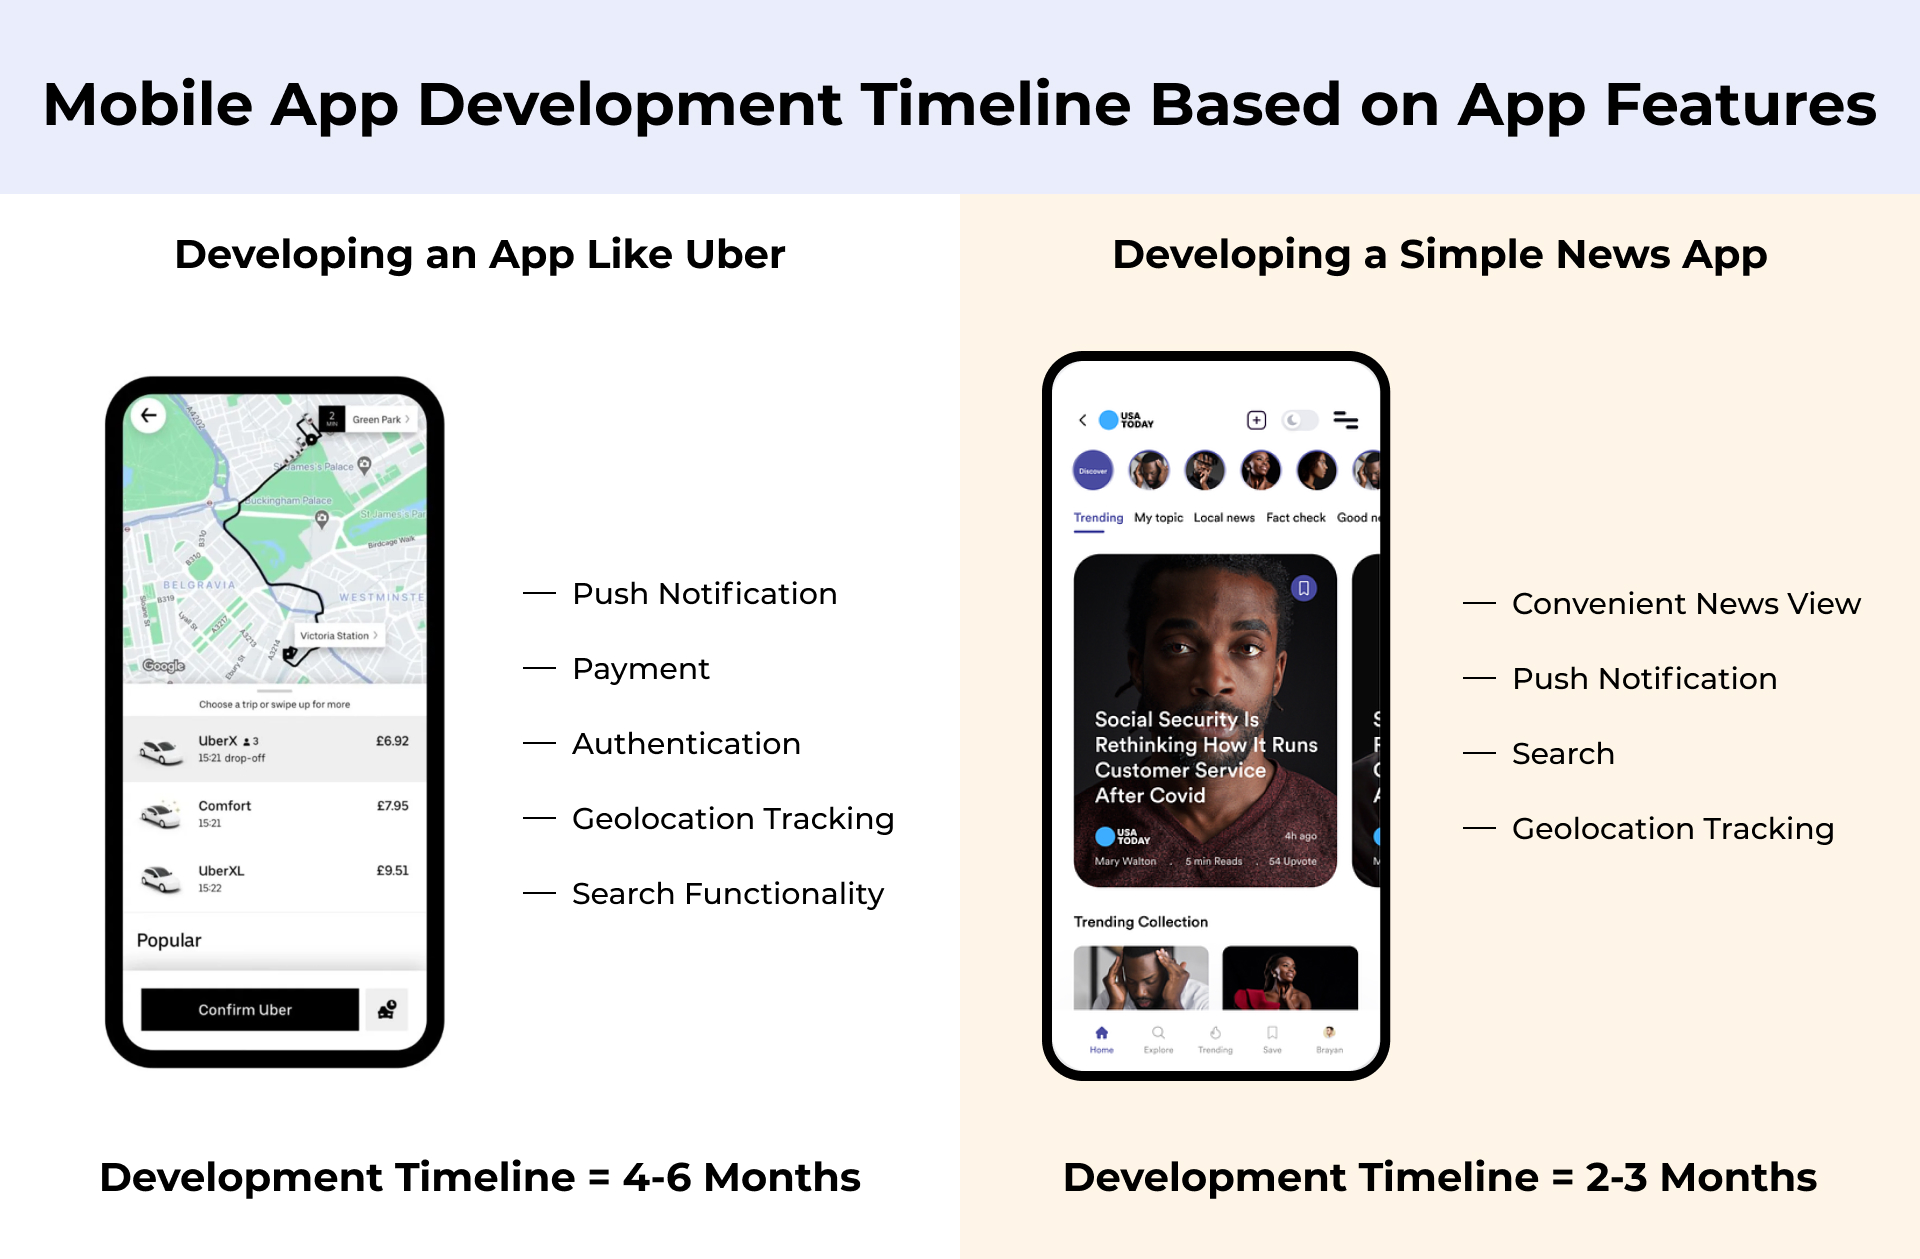 Mobile App Development Timeline Based on App Features